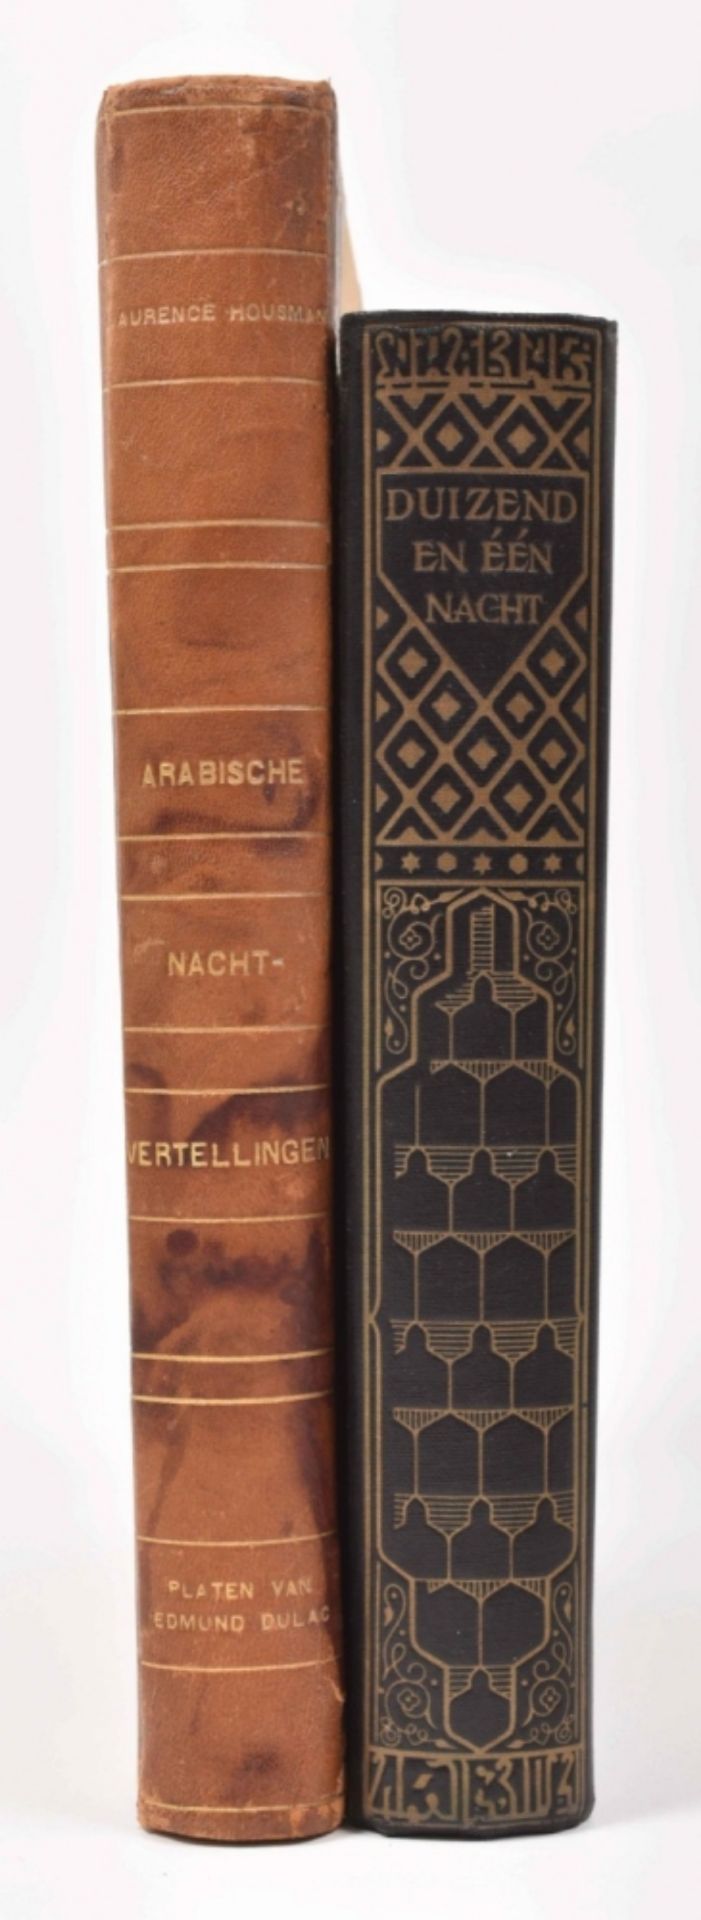 Two Dutch editions: Arabische nachtvertellingen - Image 3 of 5